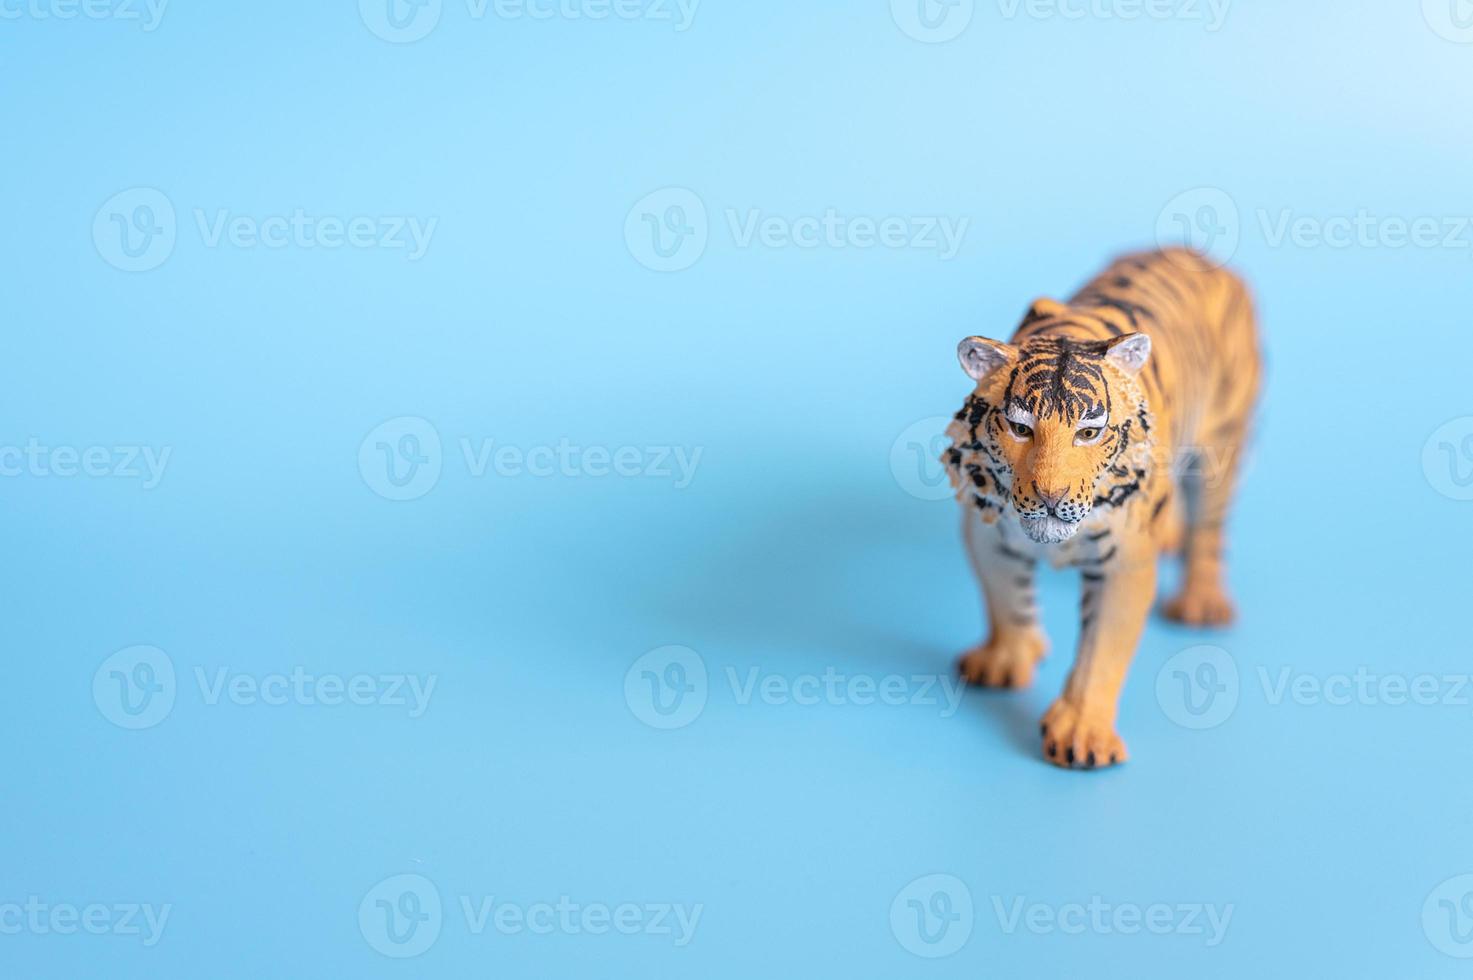 tiger figure toy 2022 year symbol photo